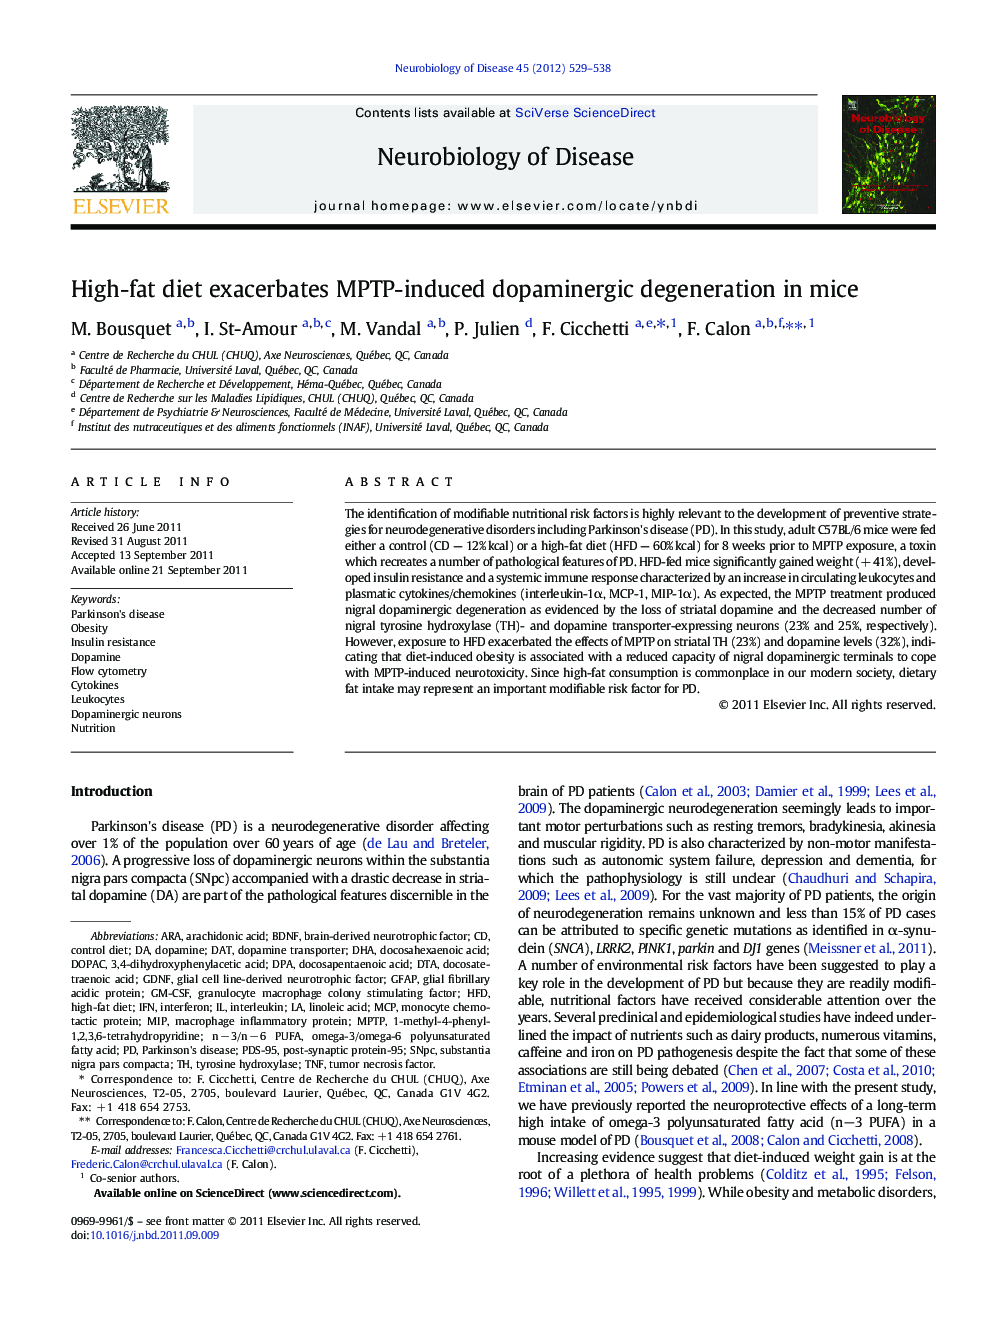 High-fat diet exacerbates MPTP-induced dopaminergic degeneration in mice